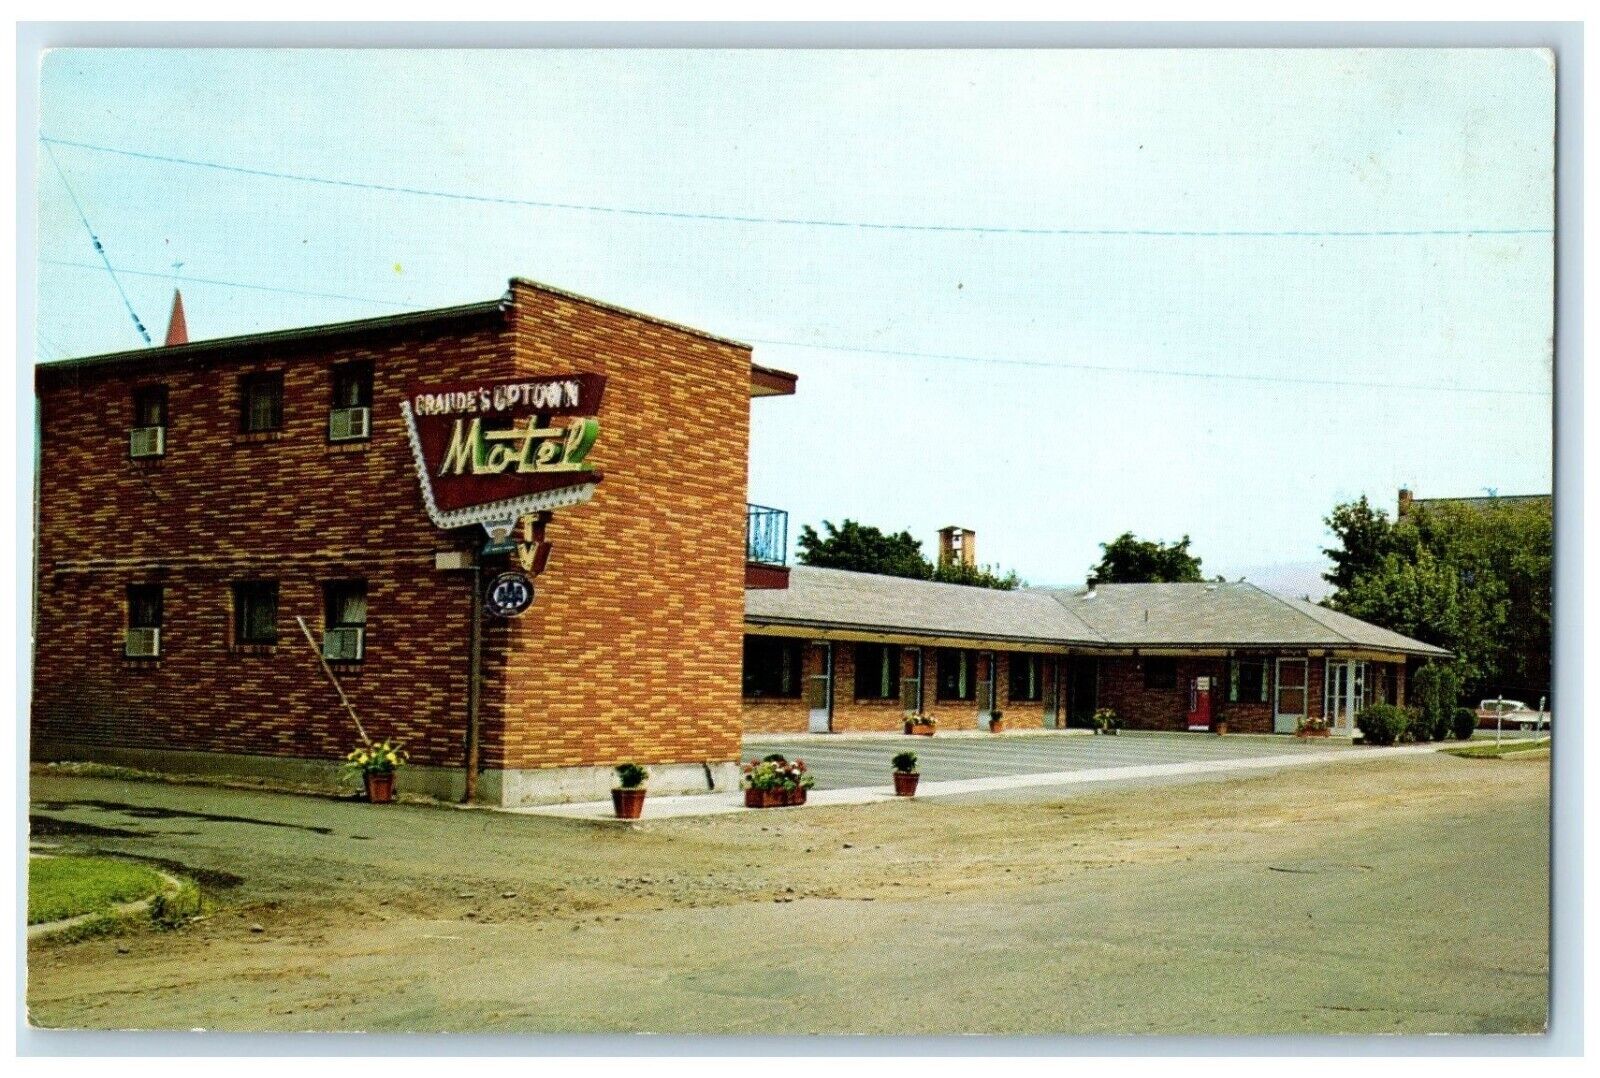 c1960 Grande's Uptown Motel Exterior Building Missoula Montana Vintage Postcard